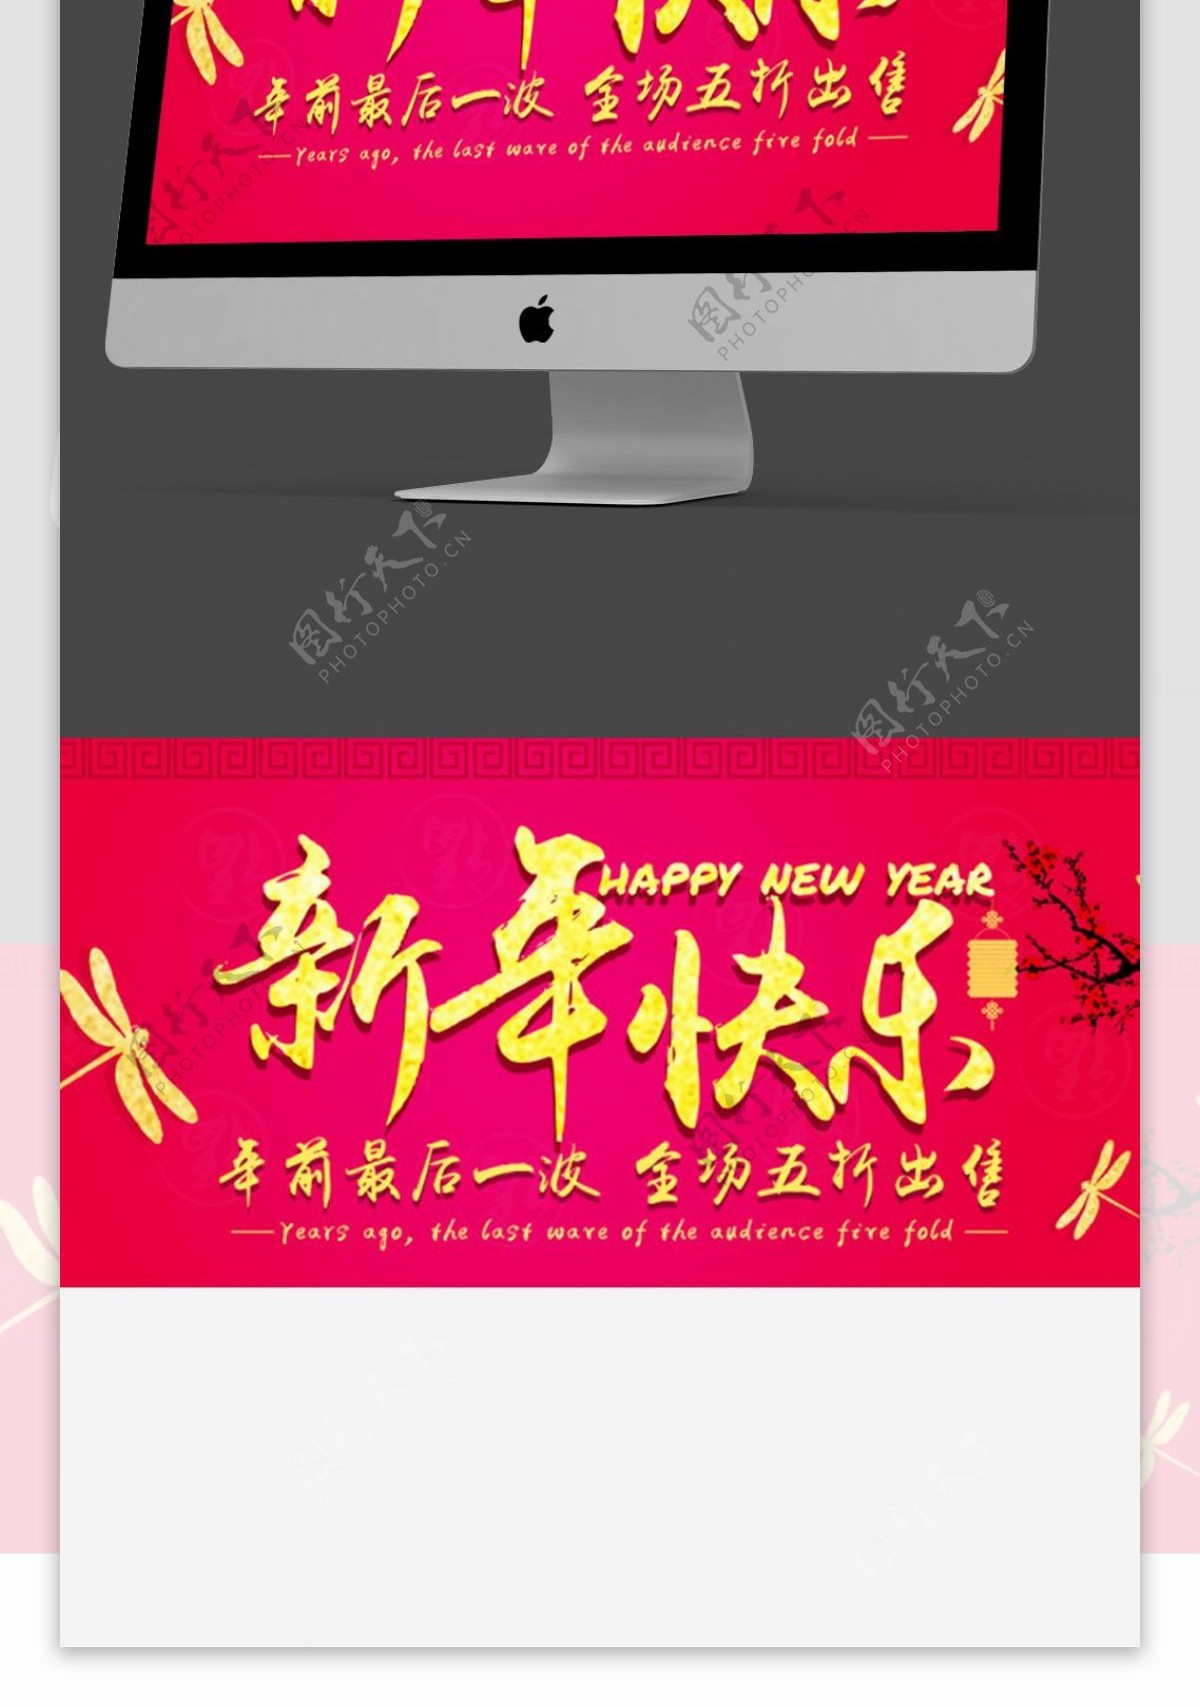 2017新年电商海报banner设计